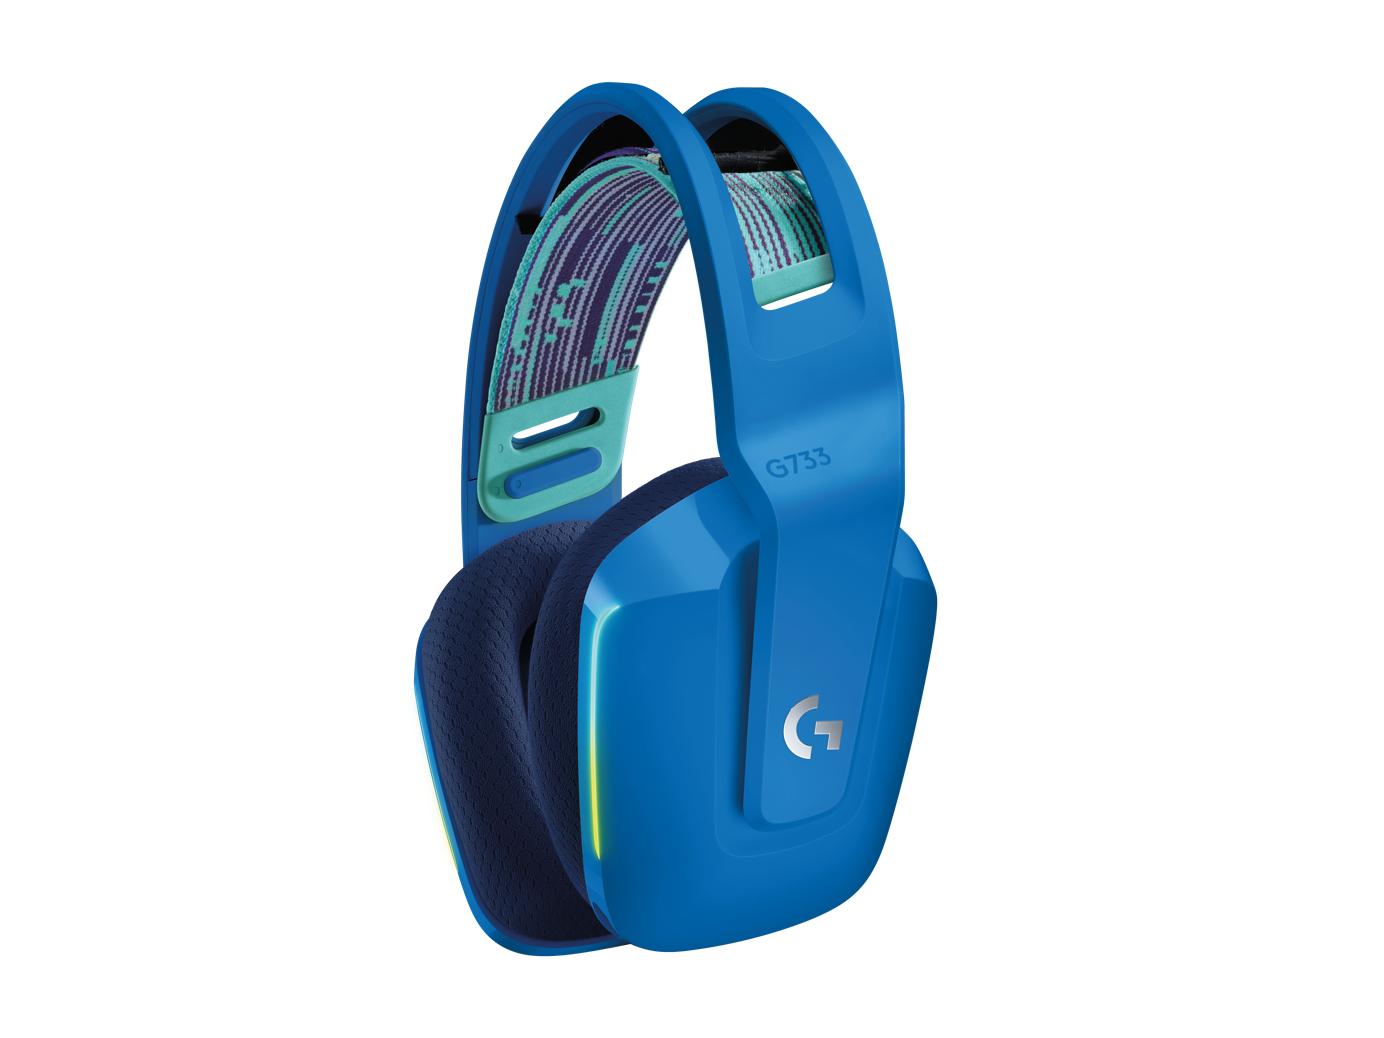 Image of G733 LIGHTSPEED Wireless RGB Gaming Headset - Blue